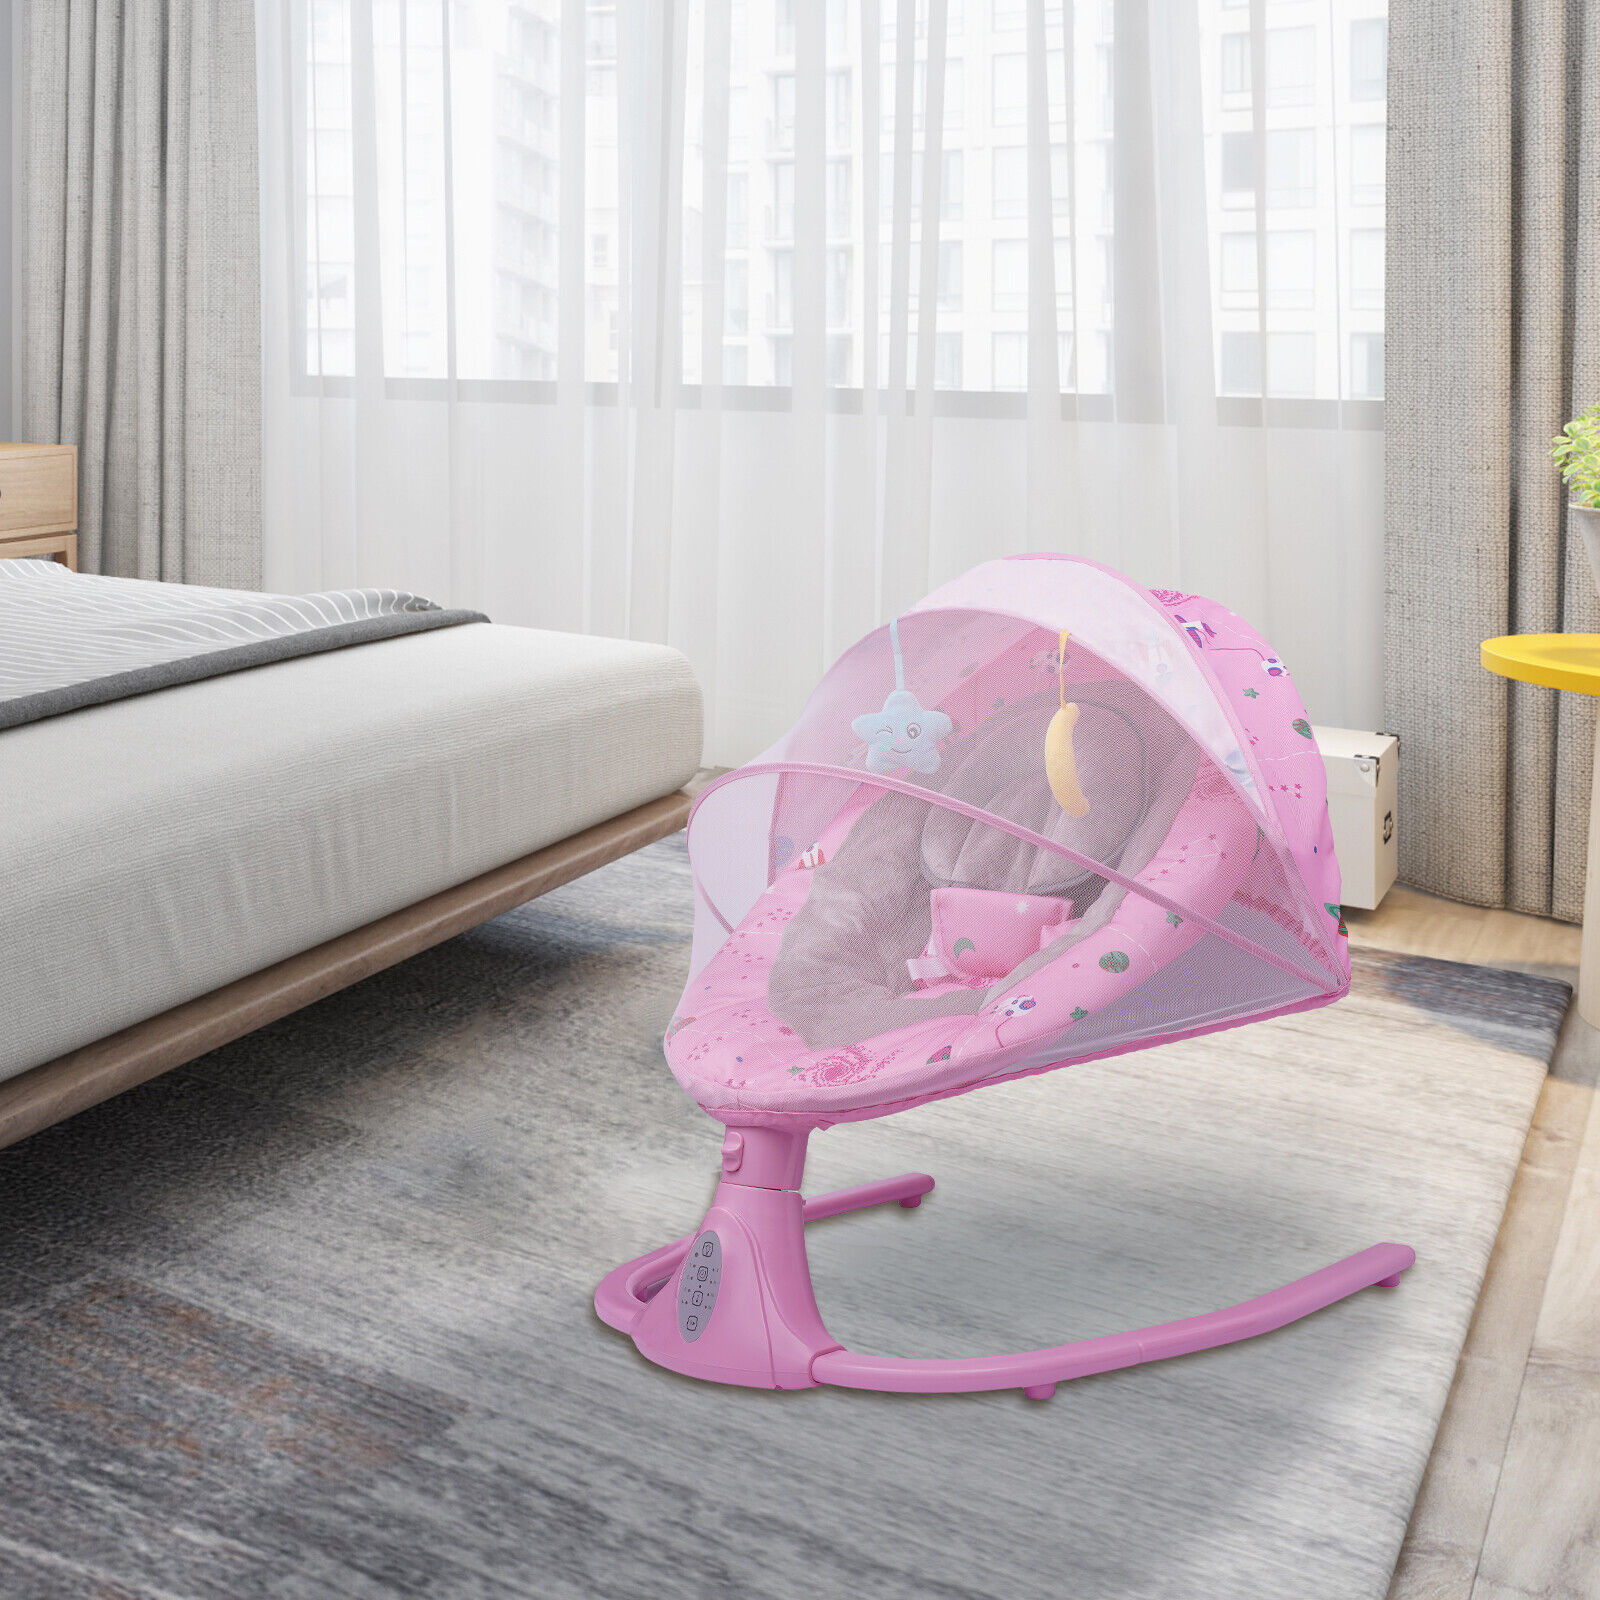 TFCFL Portable Electric Baby Swing Cradle Rocker Newborn Comfort Sleep Chair Crib Music Seat Pink - image 1 of 8